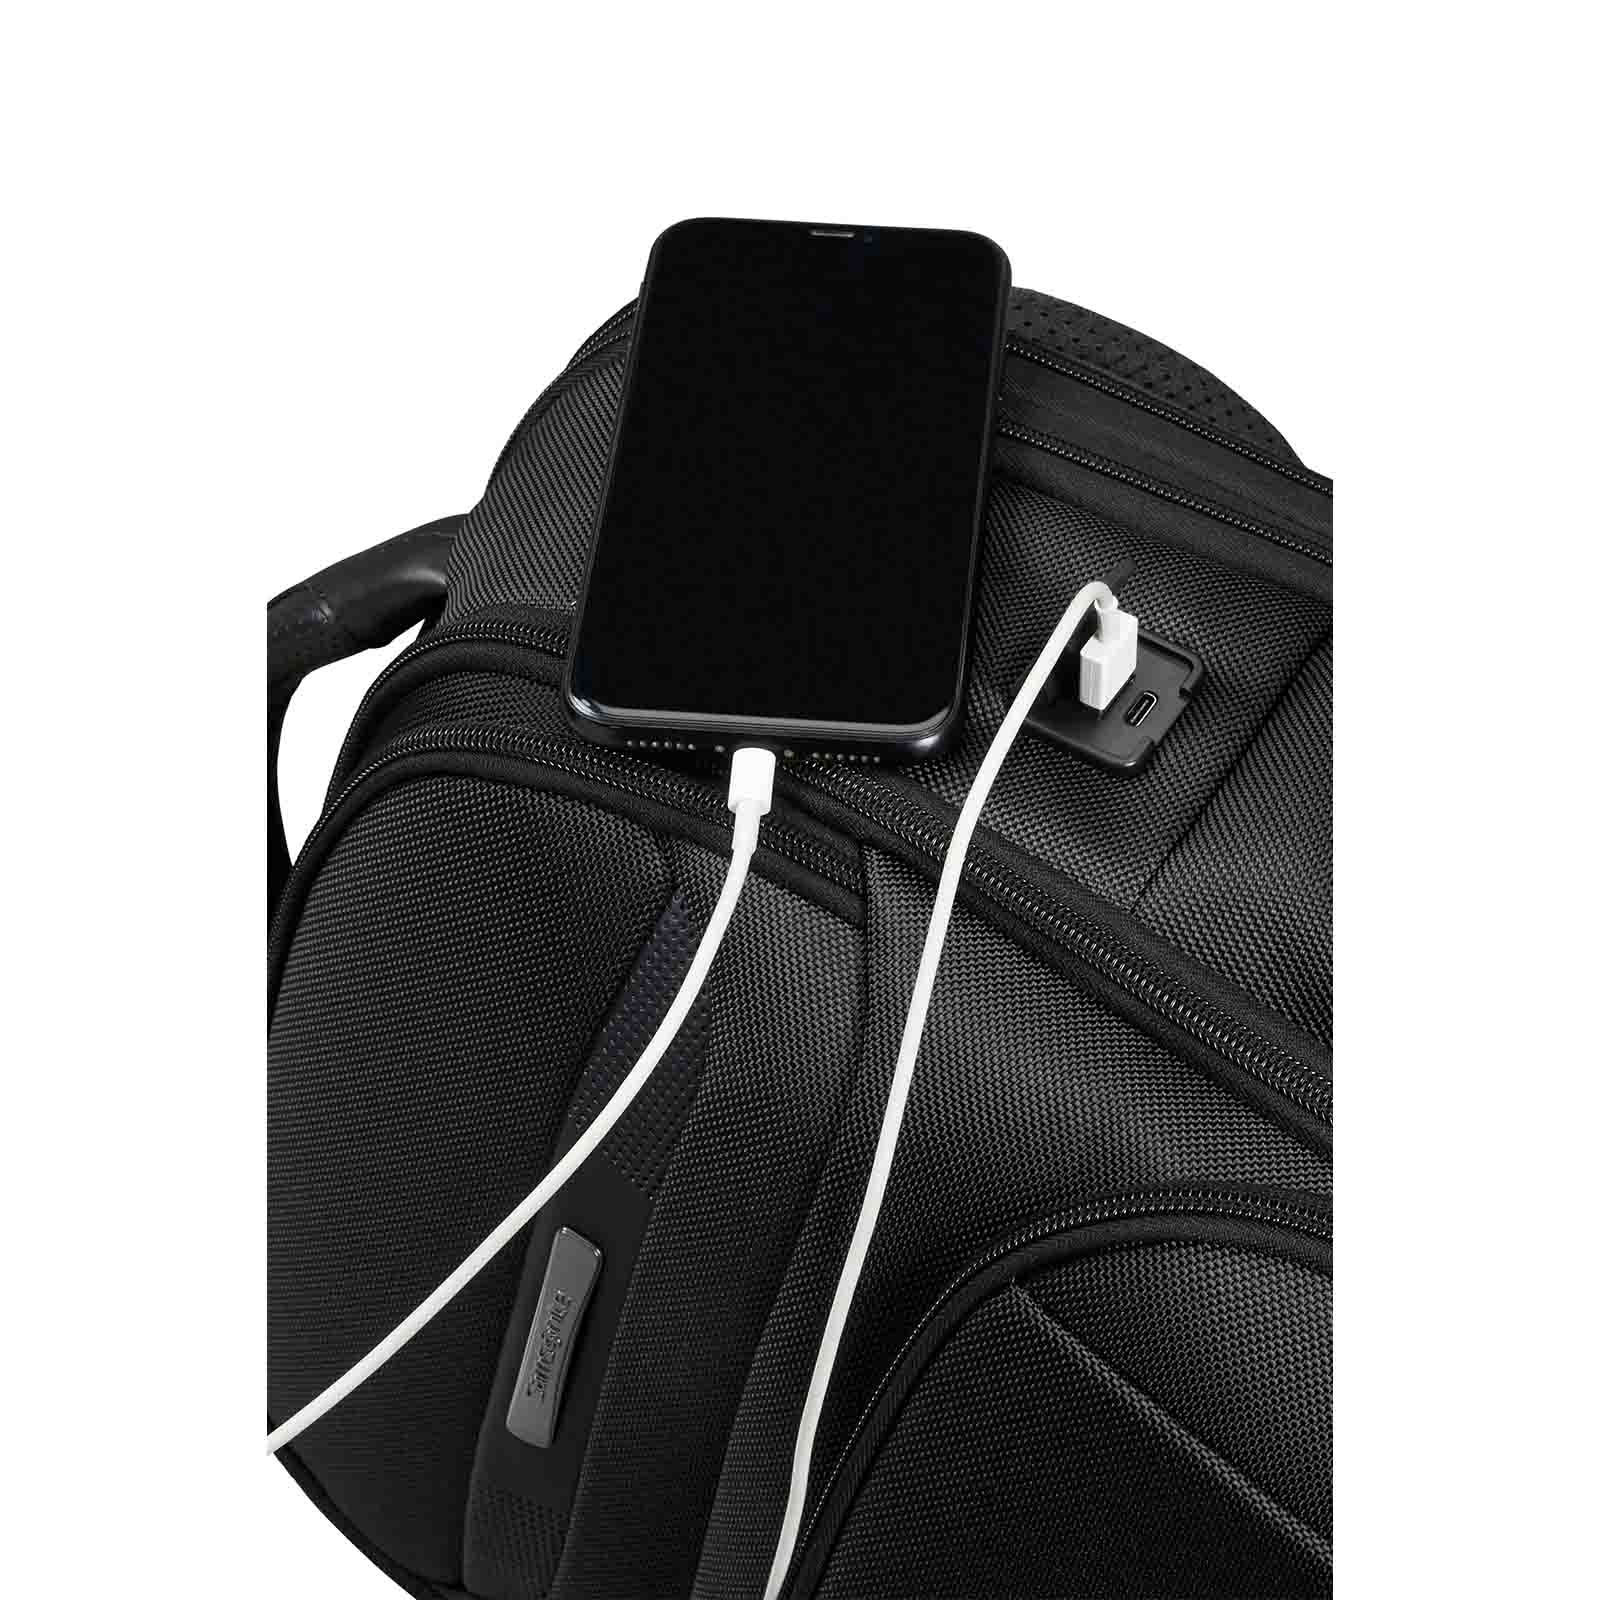 Samsonite-Pro-Dlx-6-Laptop-Backpack-15-Inch-USB-Port